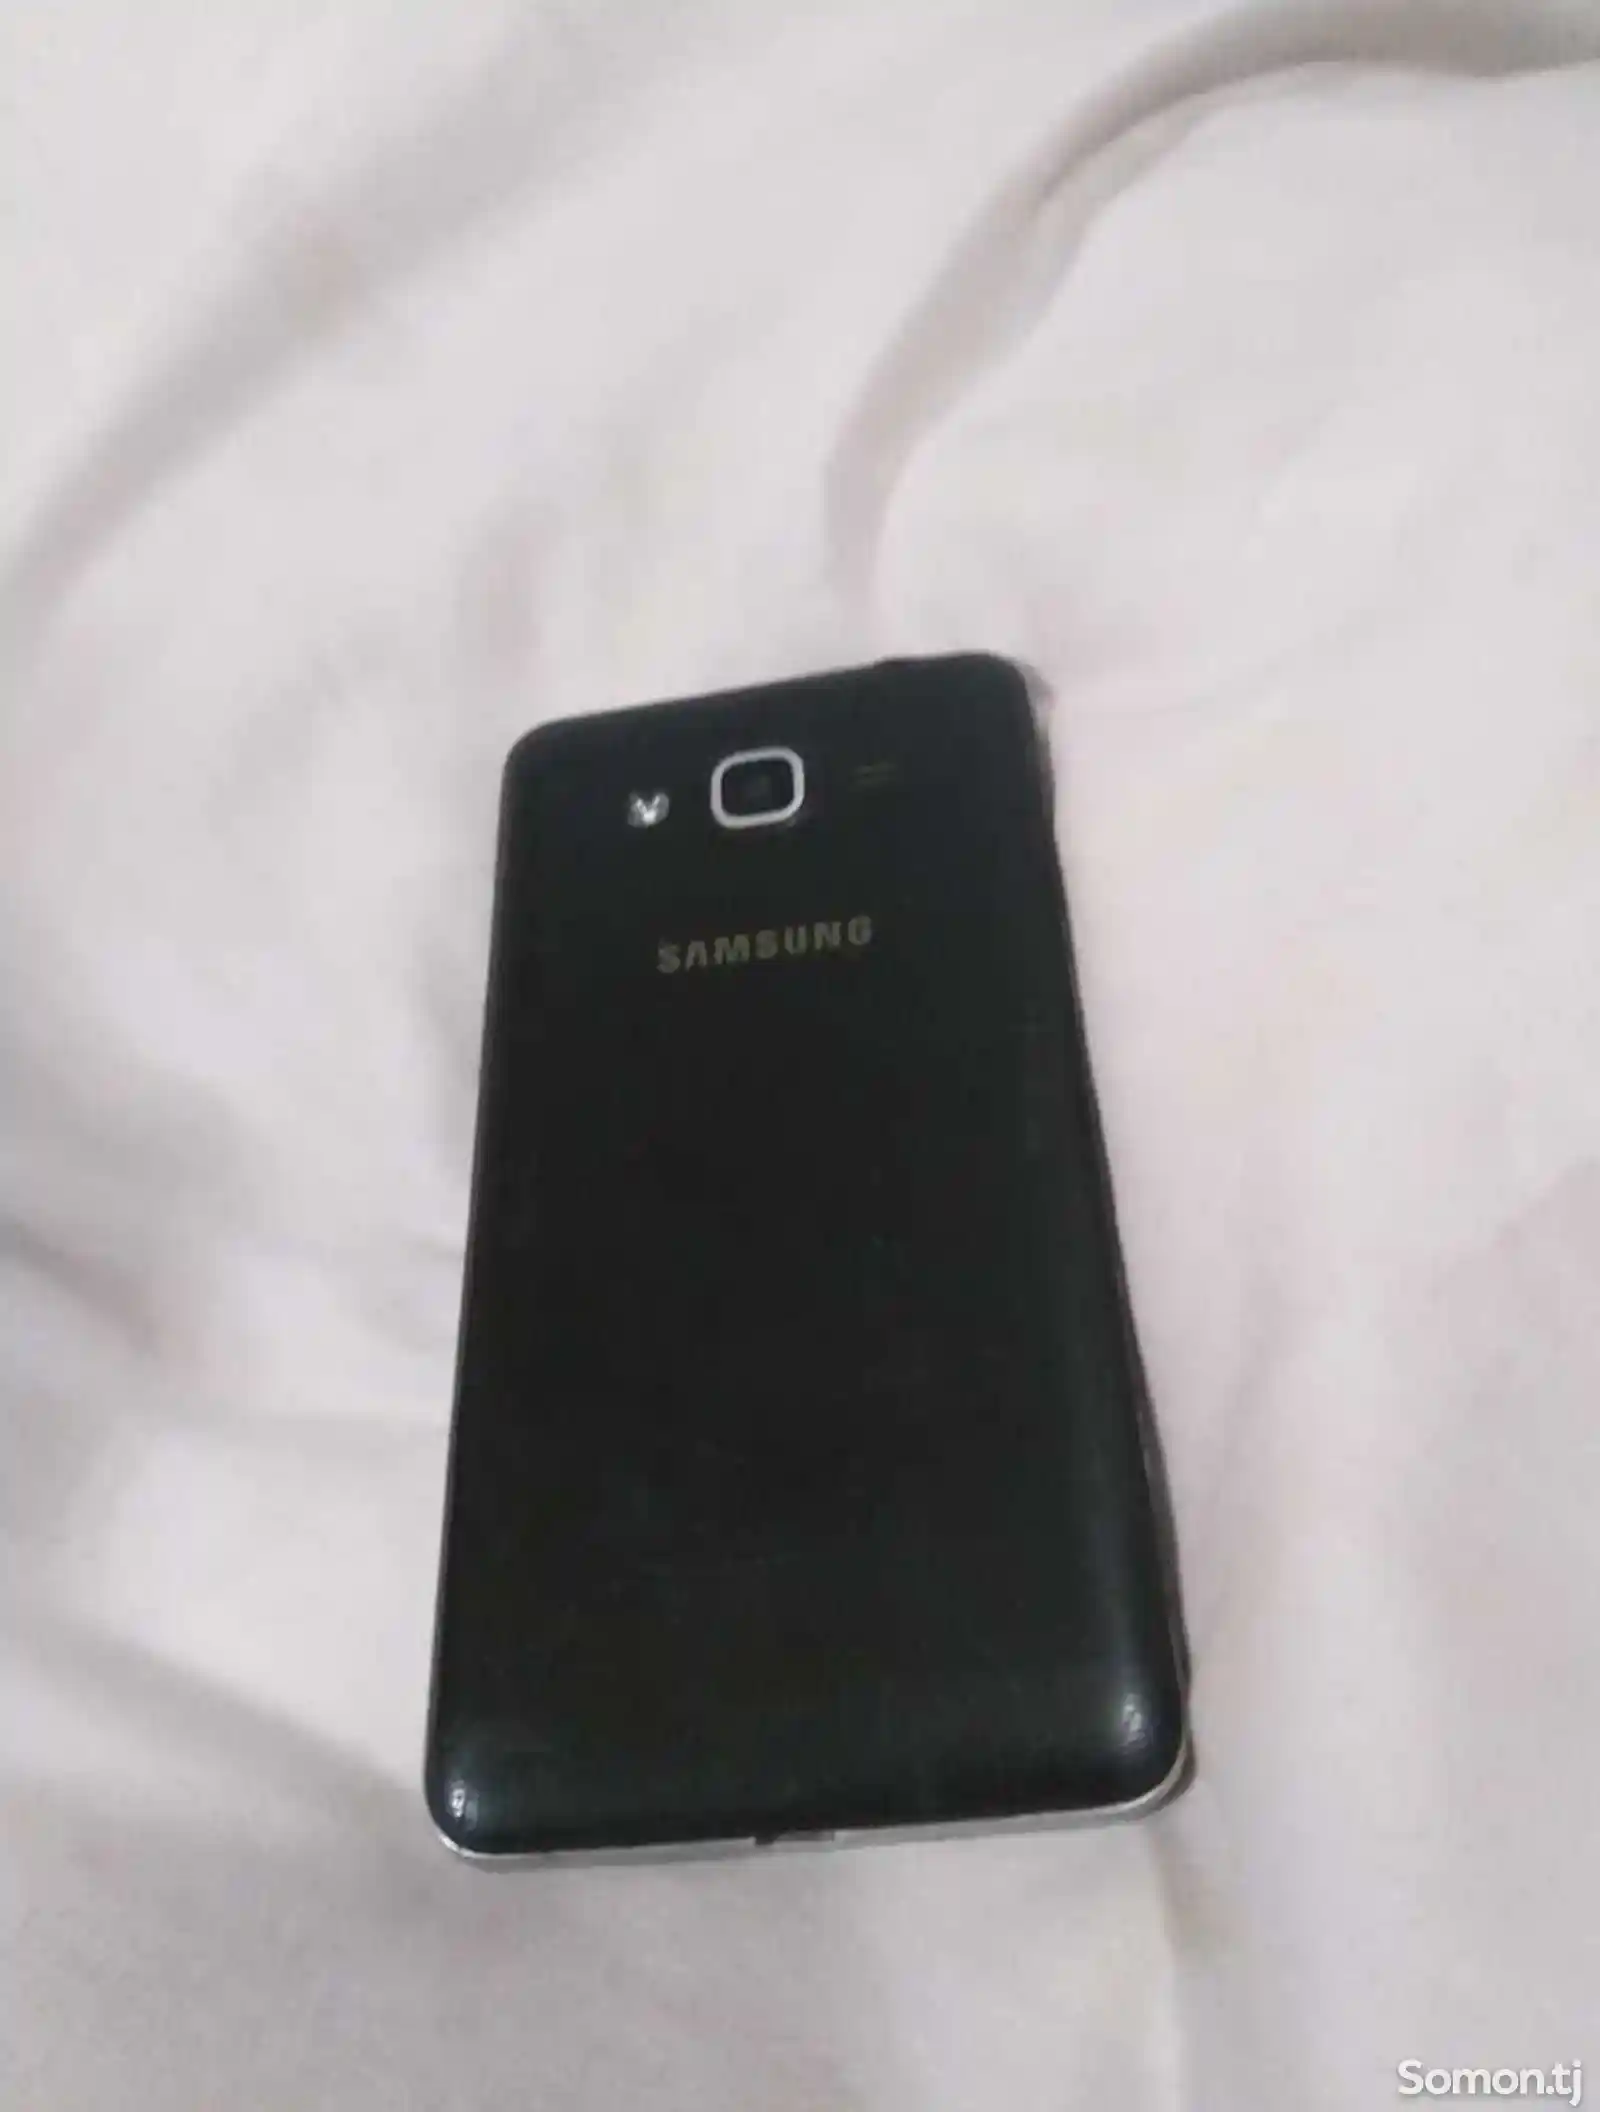 Samsung Galaxy Grand Prime Gold 8Gb Duos-2